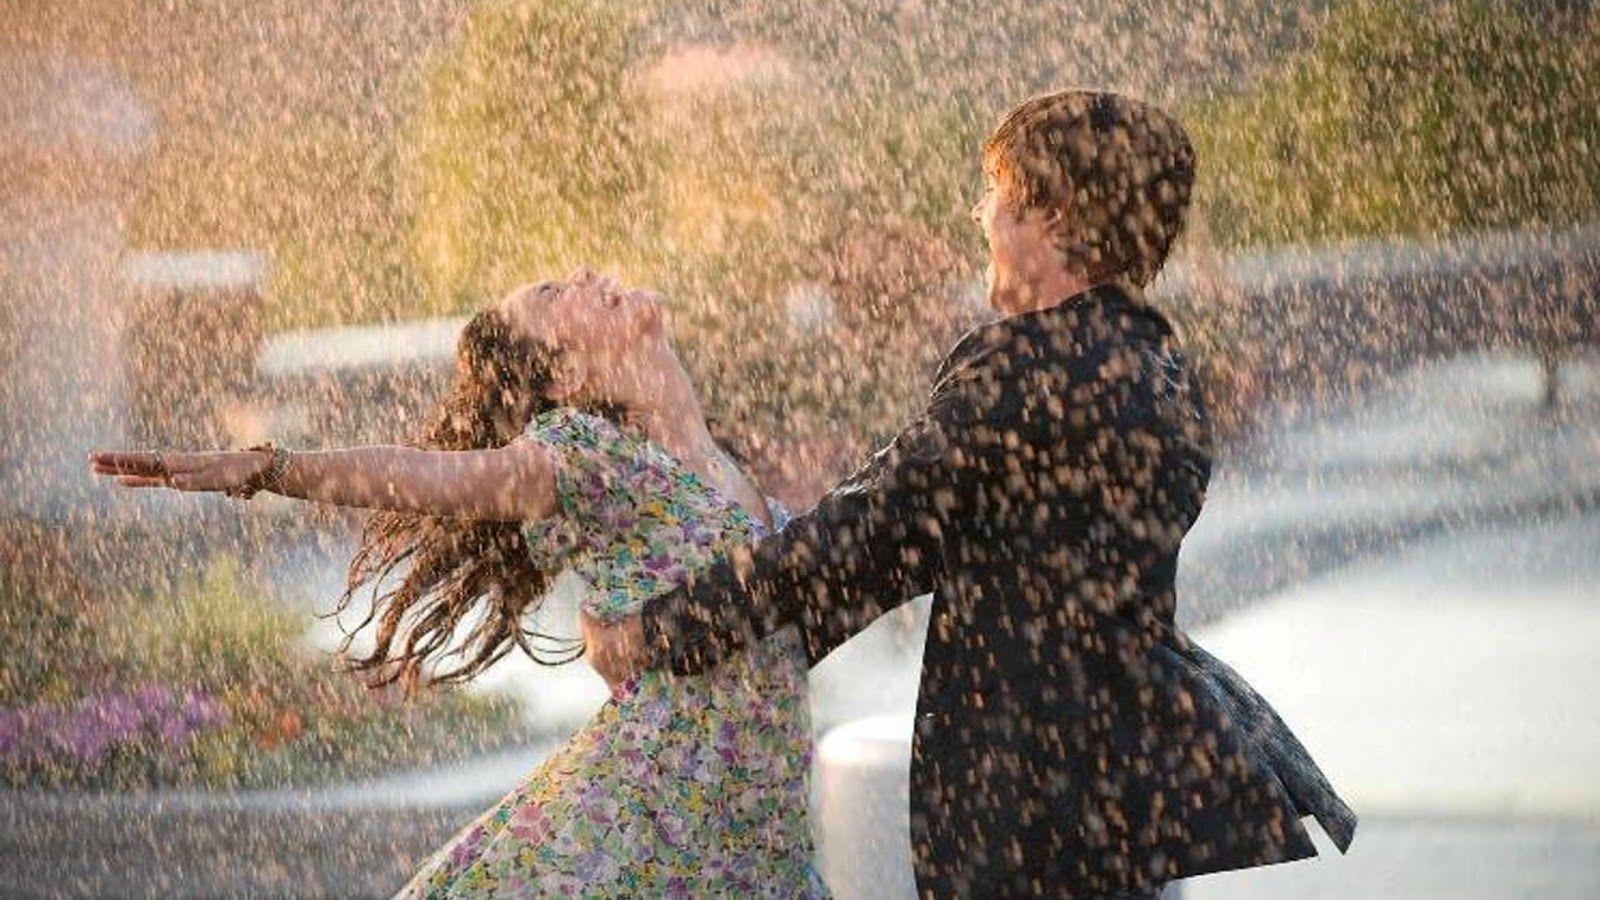 Romantic Couple in Rain Photo and Wallpaper 2014